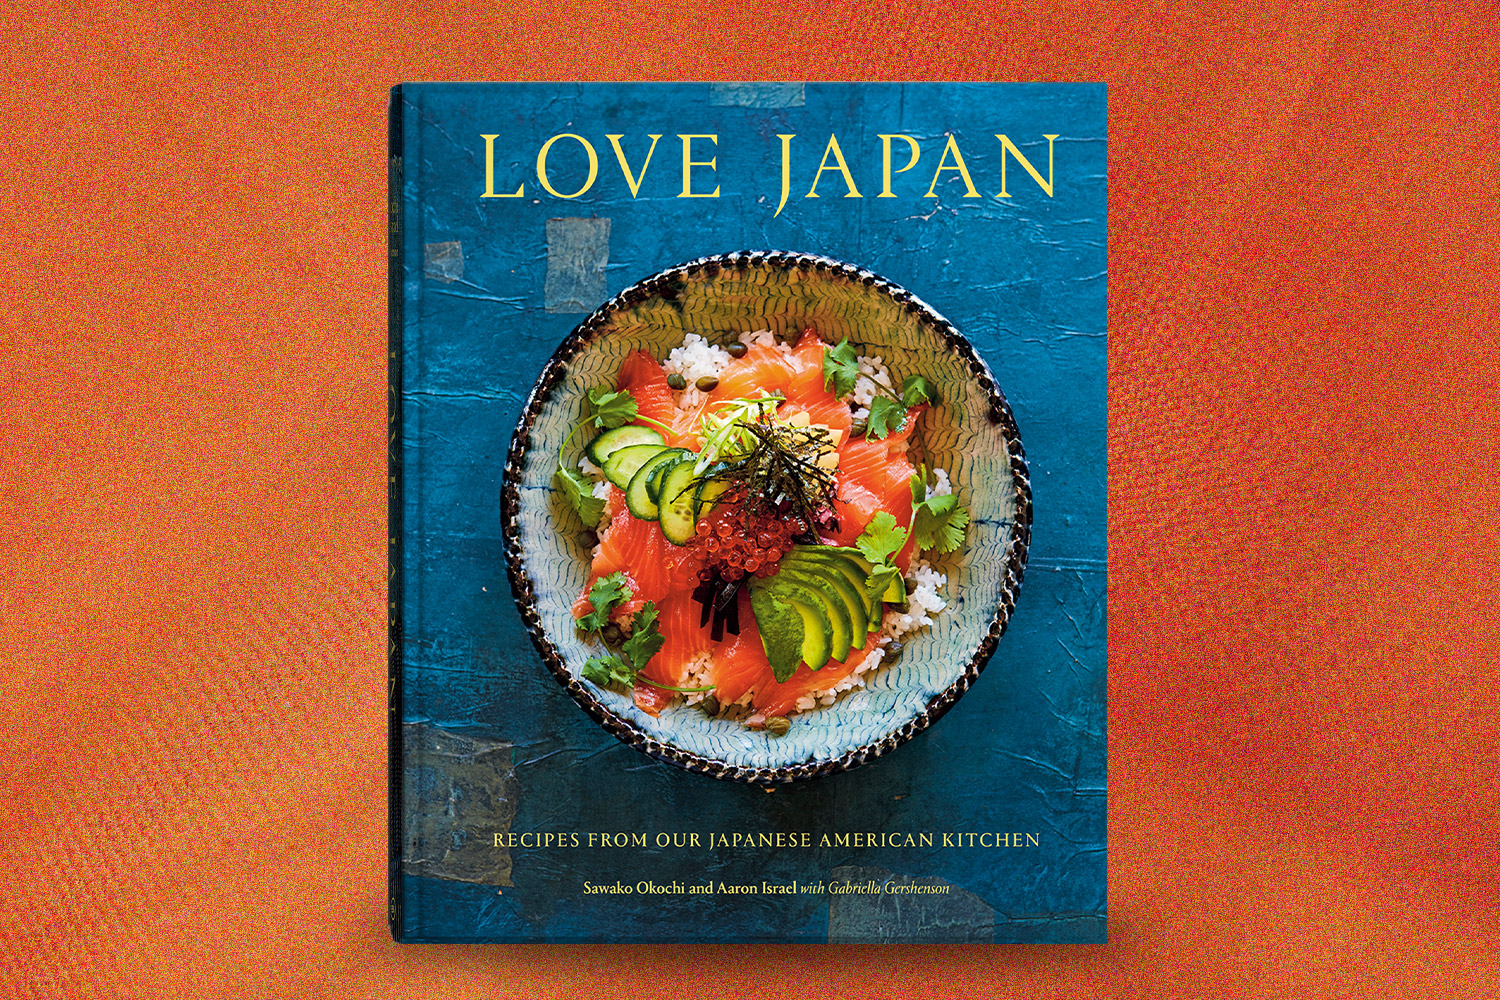 love japan cookbook on an orange background